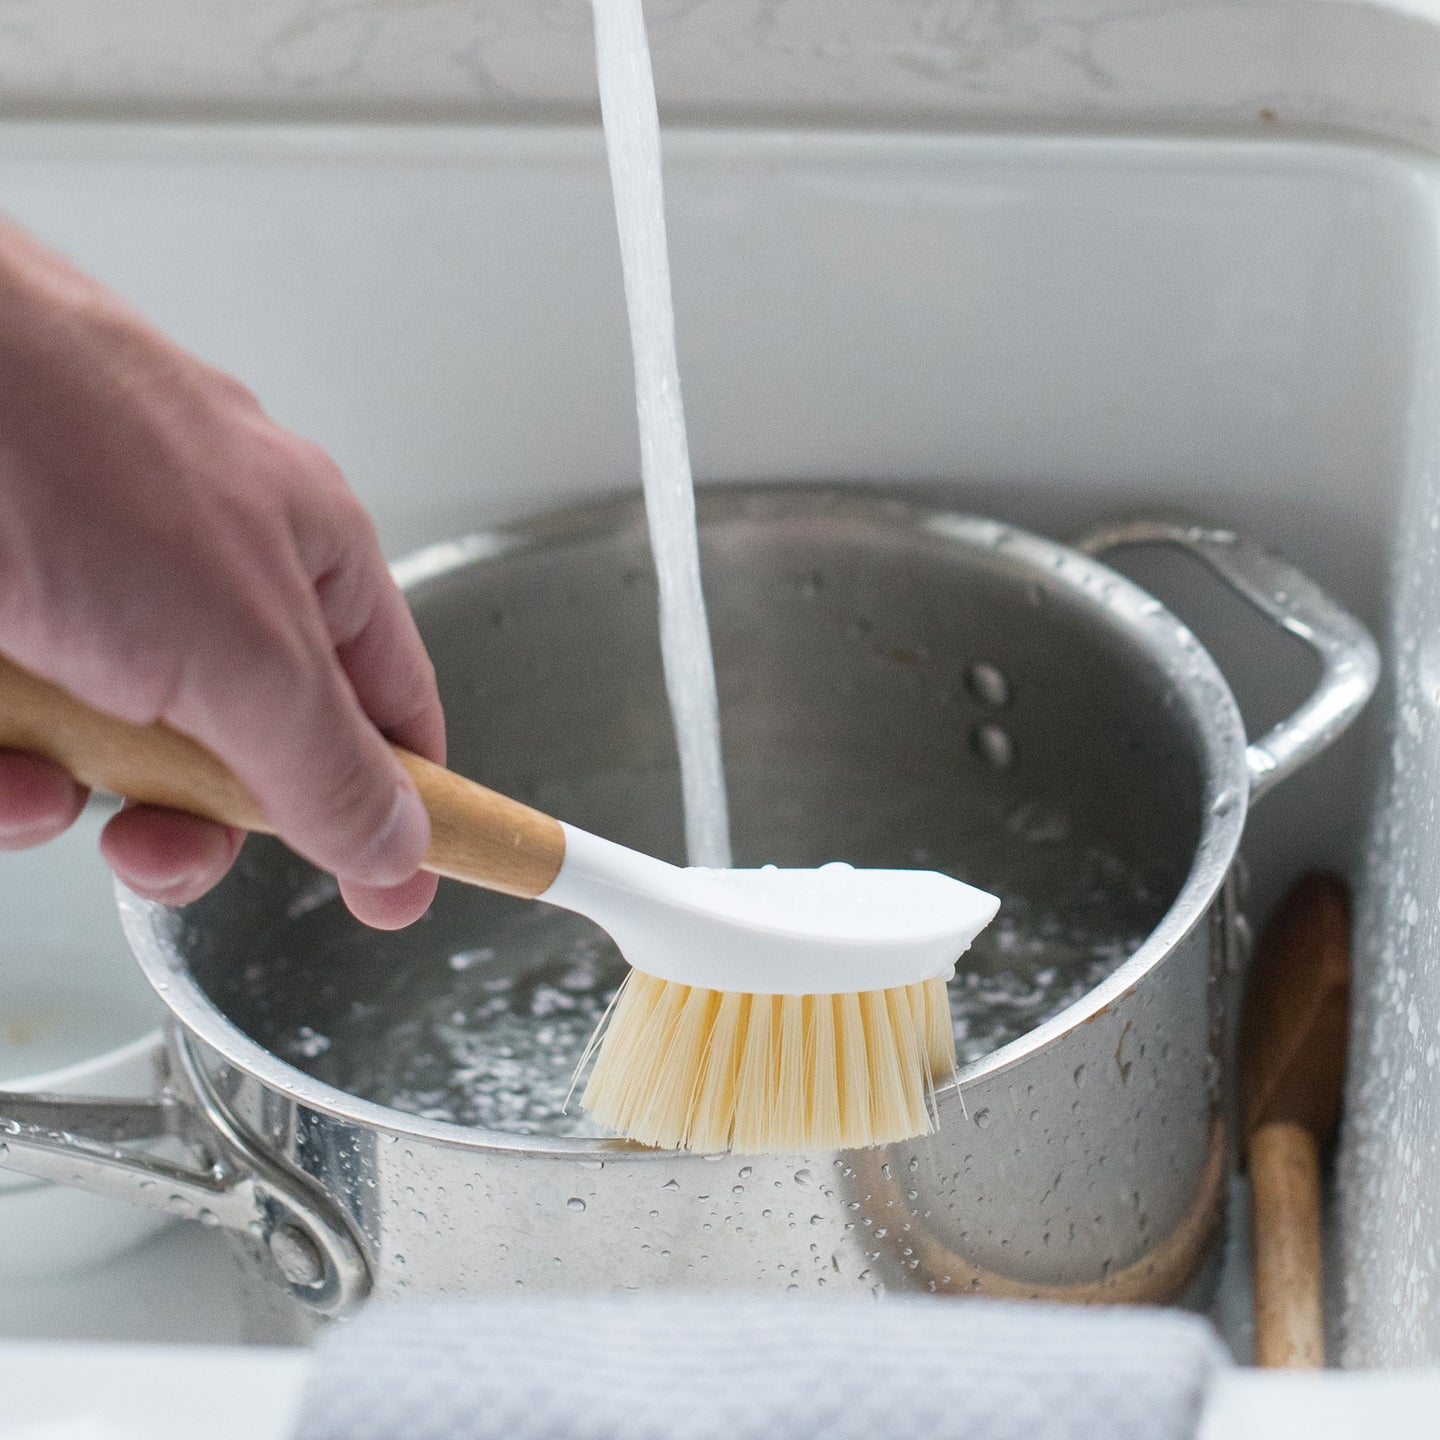 Full Circle Tough Stuff All-Purpose Scrub Brush – Full Circle Home